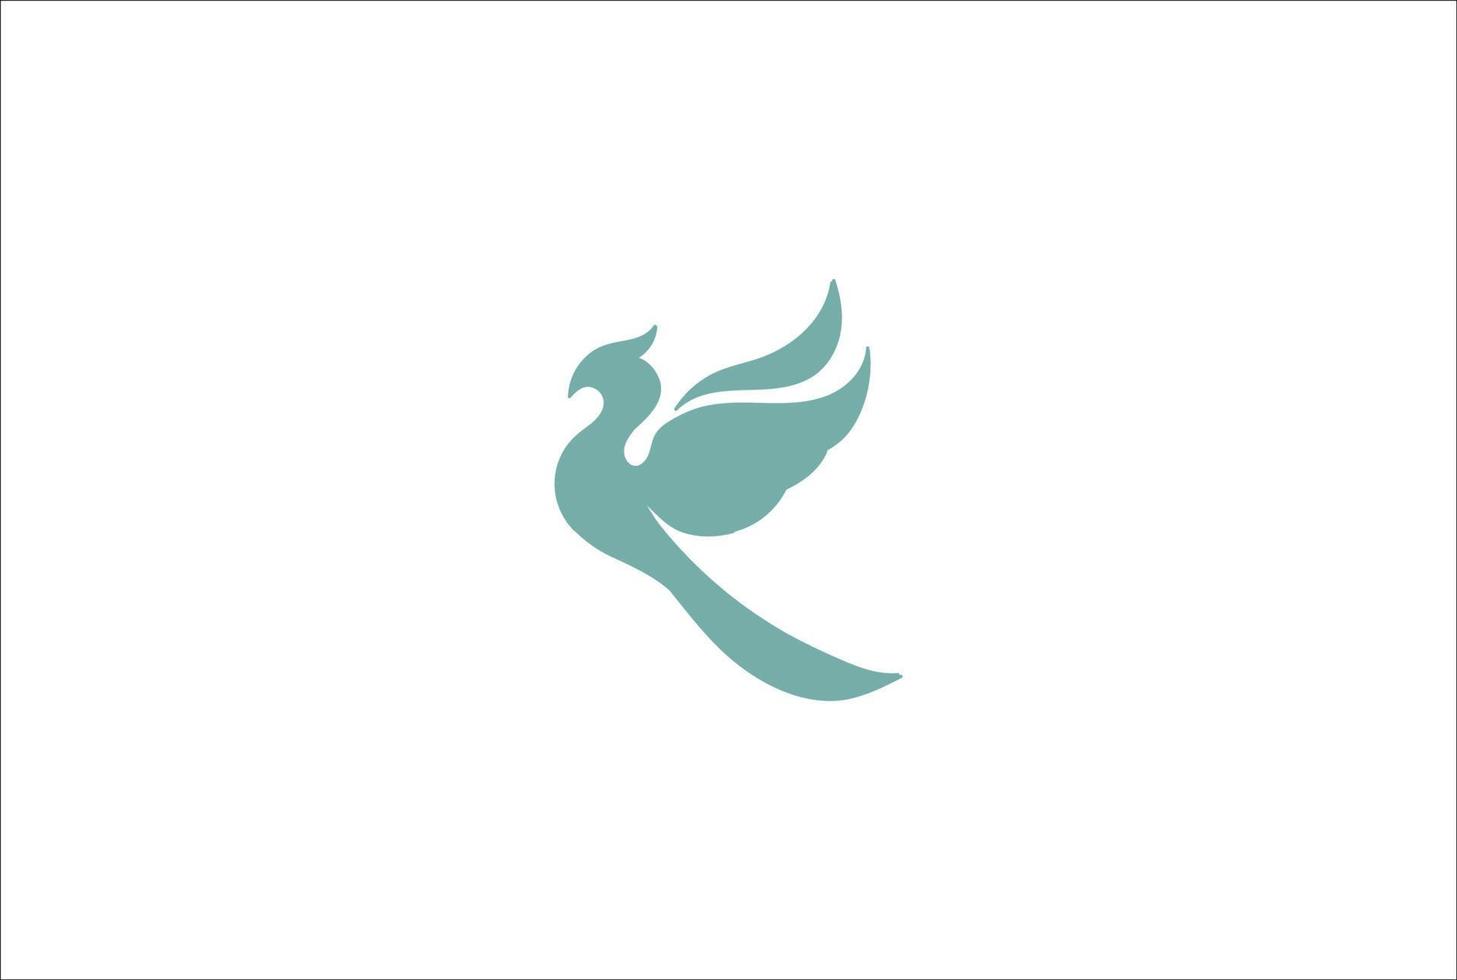 Simple Minimalist Flying Bird Eagle Falcon Hawk Phoenix Silhouette Logo Design Vector